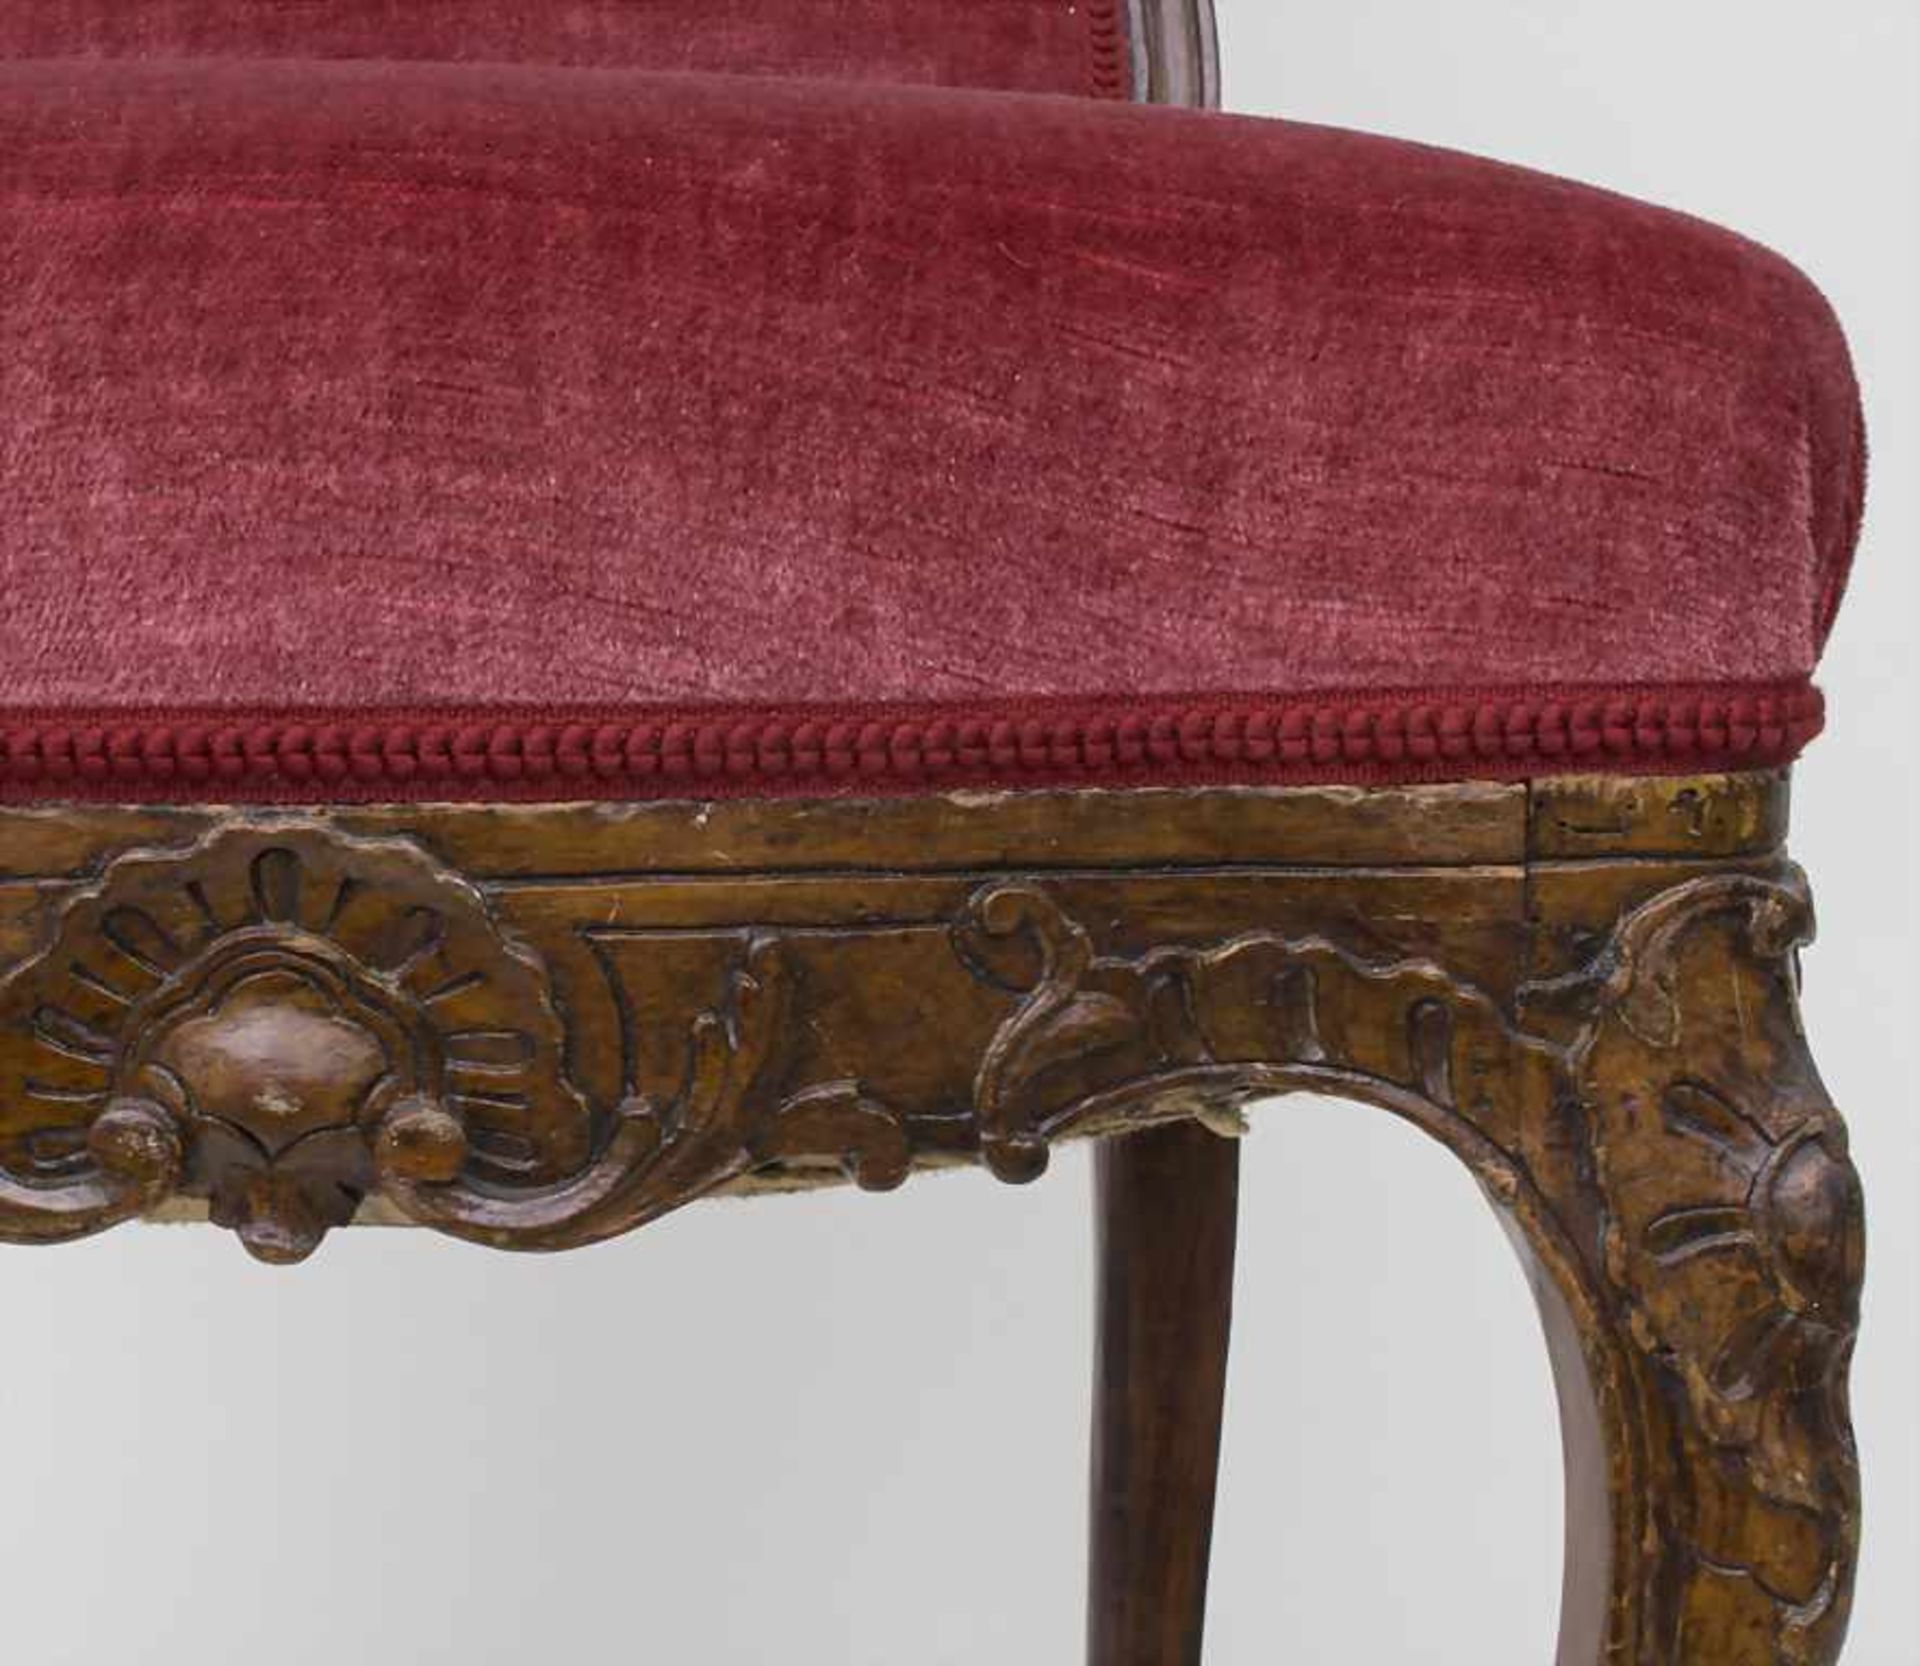 Rokoko--Stuhl mit Rocaillendekor / A Rococo chair with rocaillesMaterial: Holz, geschnitzt, dunkel - Image 4 of 5